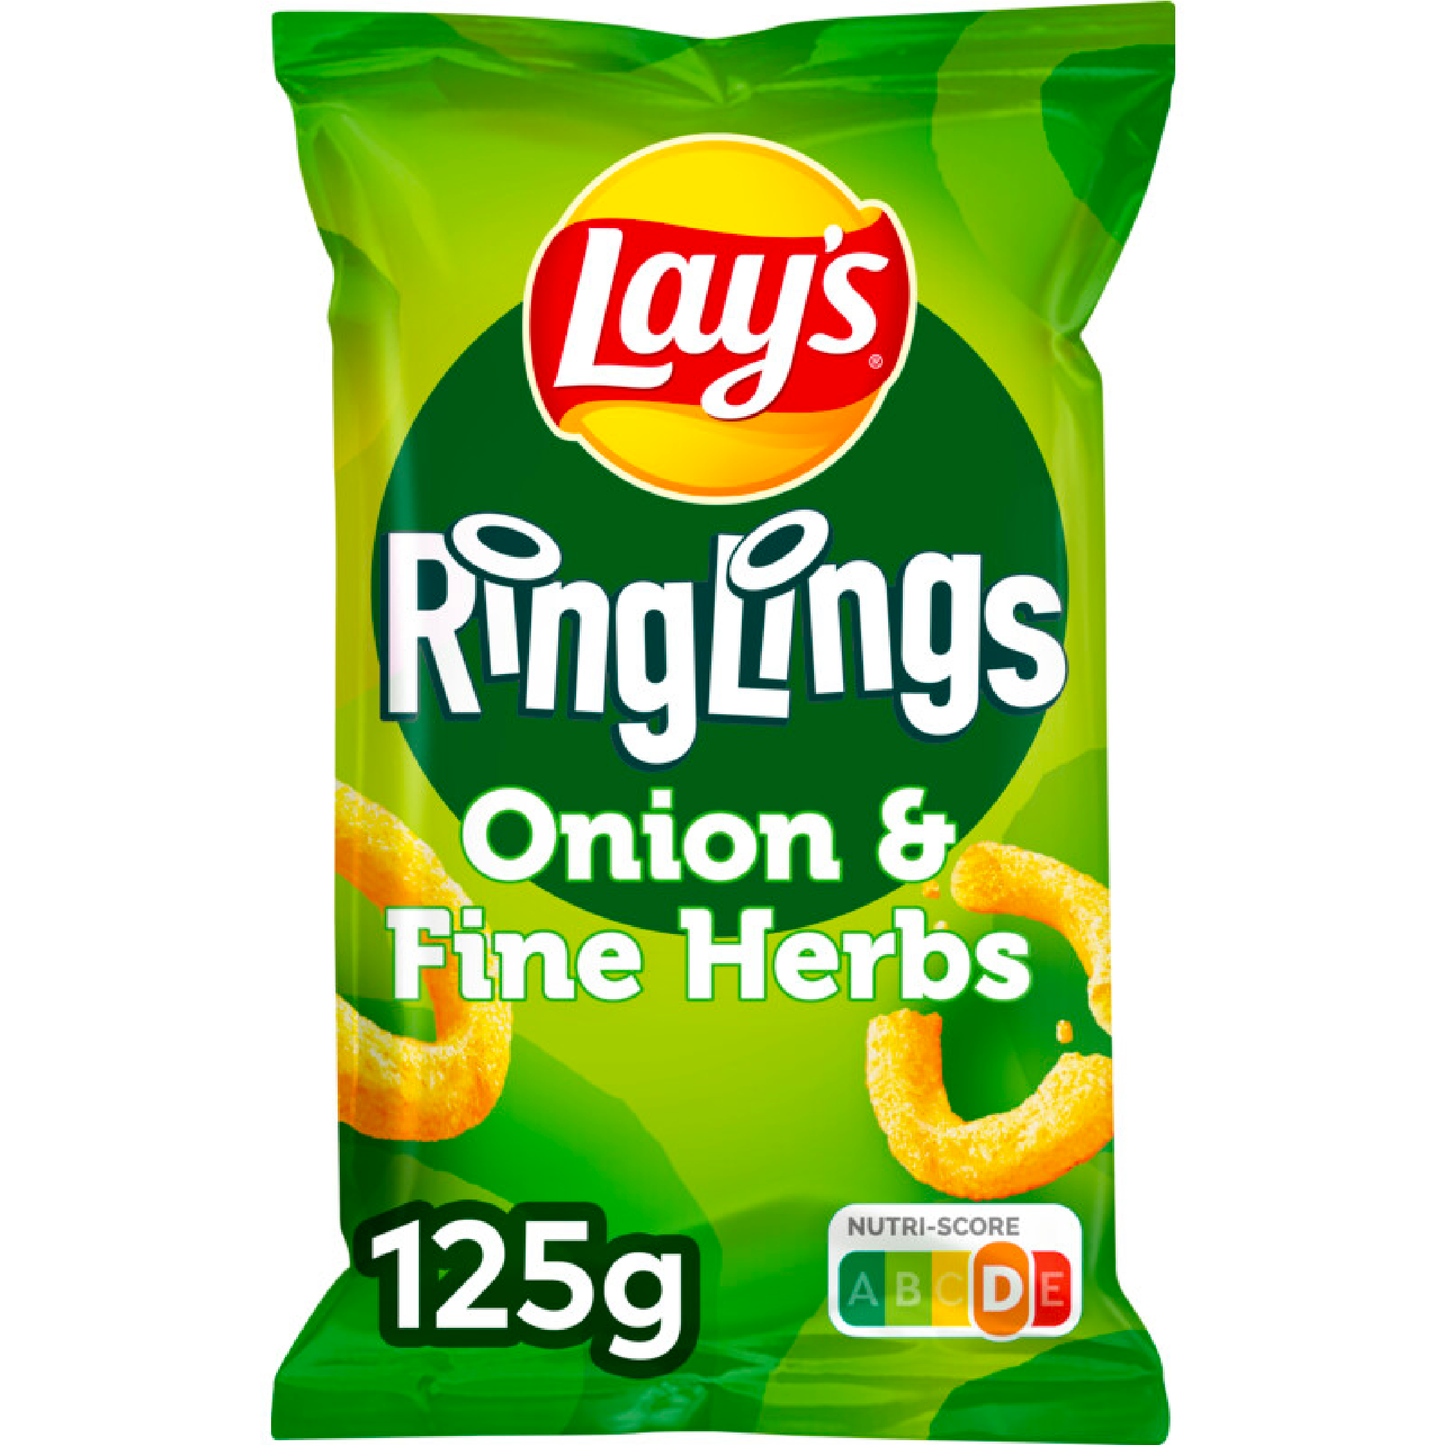 Lay's Ringlings Onion & Fine Herbs